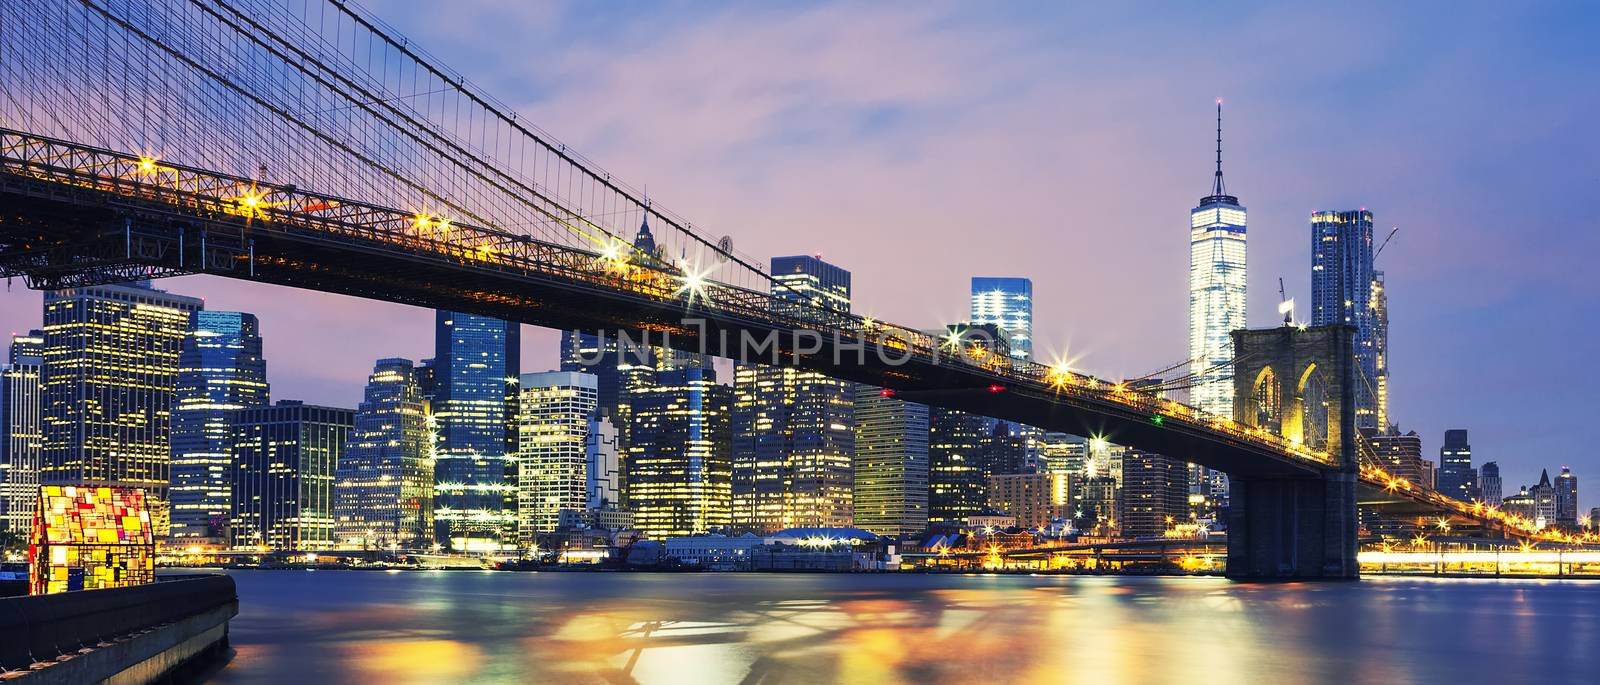 Brooklyn Bridge at dusk by vwalakte